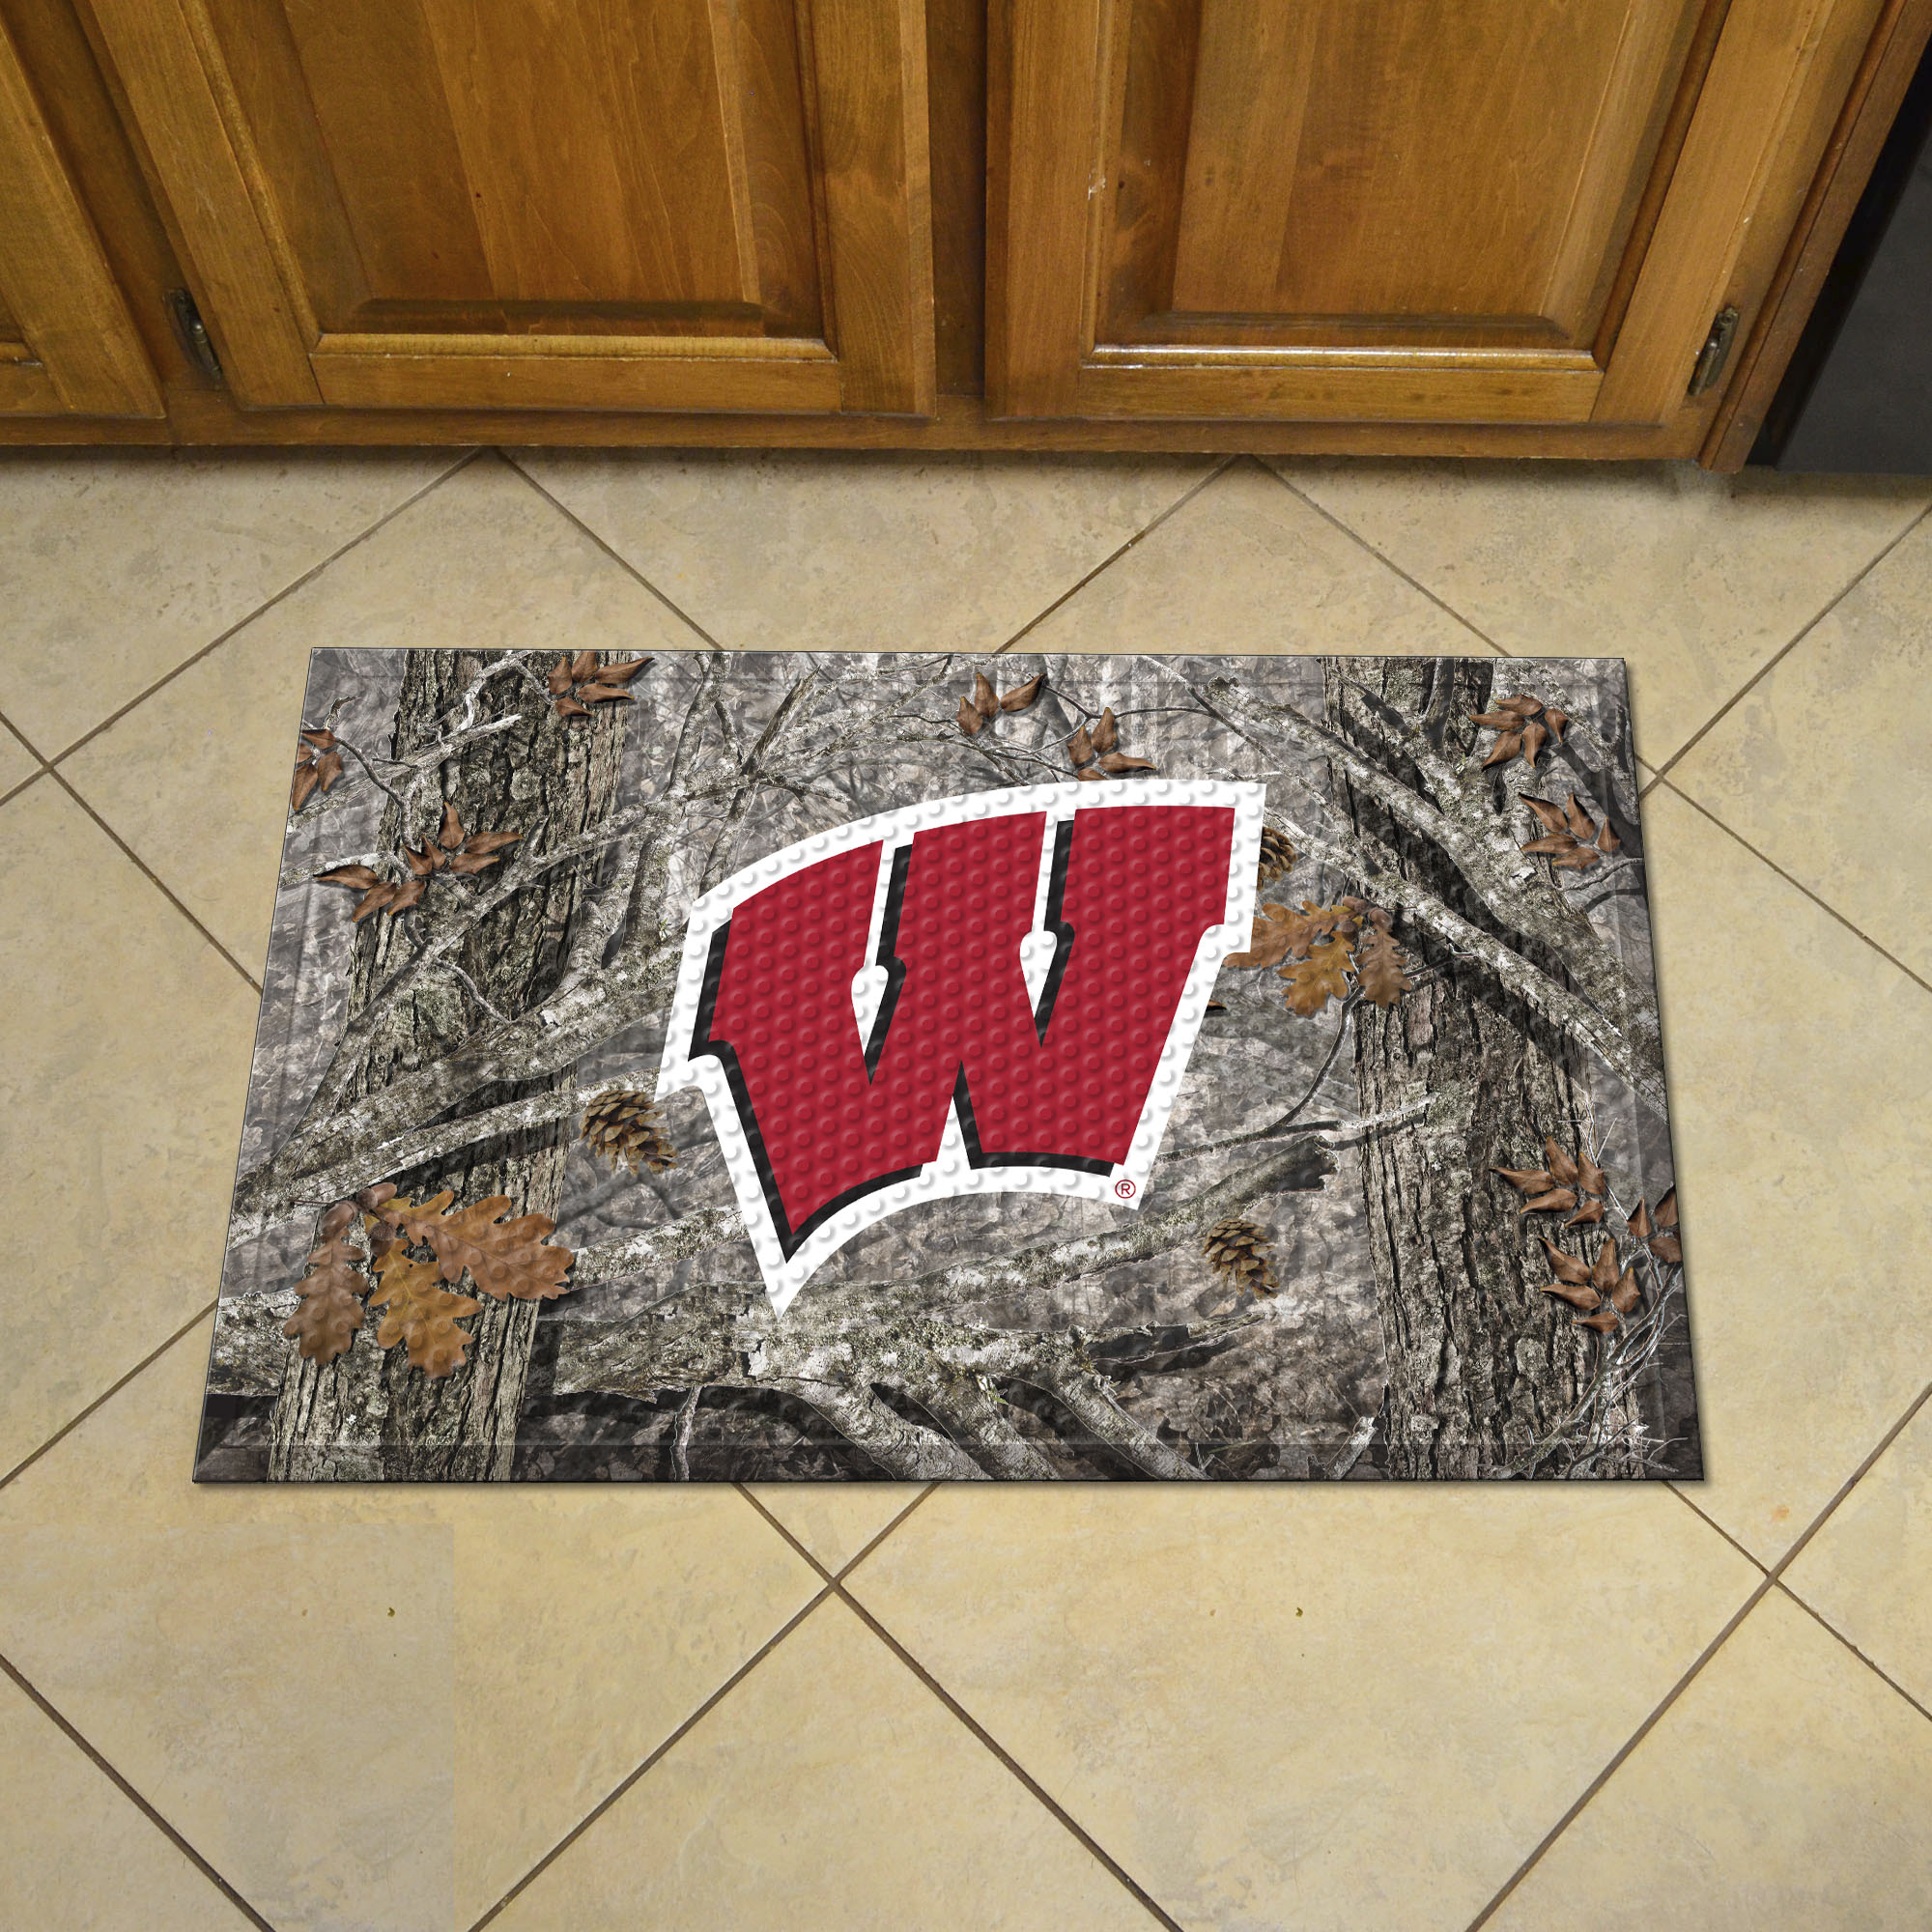 University of Wisconsin Scrapper Doormat - 19" x 30" Rubber (Field & Logo: Camo & Logo)